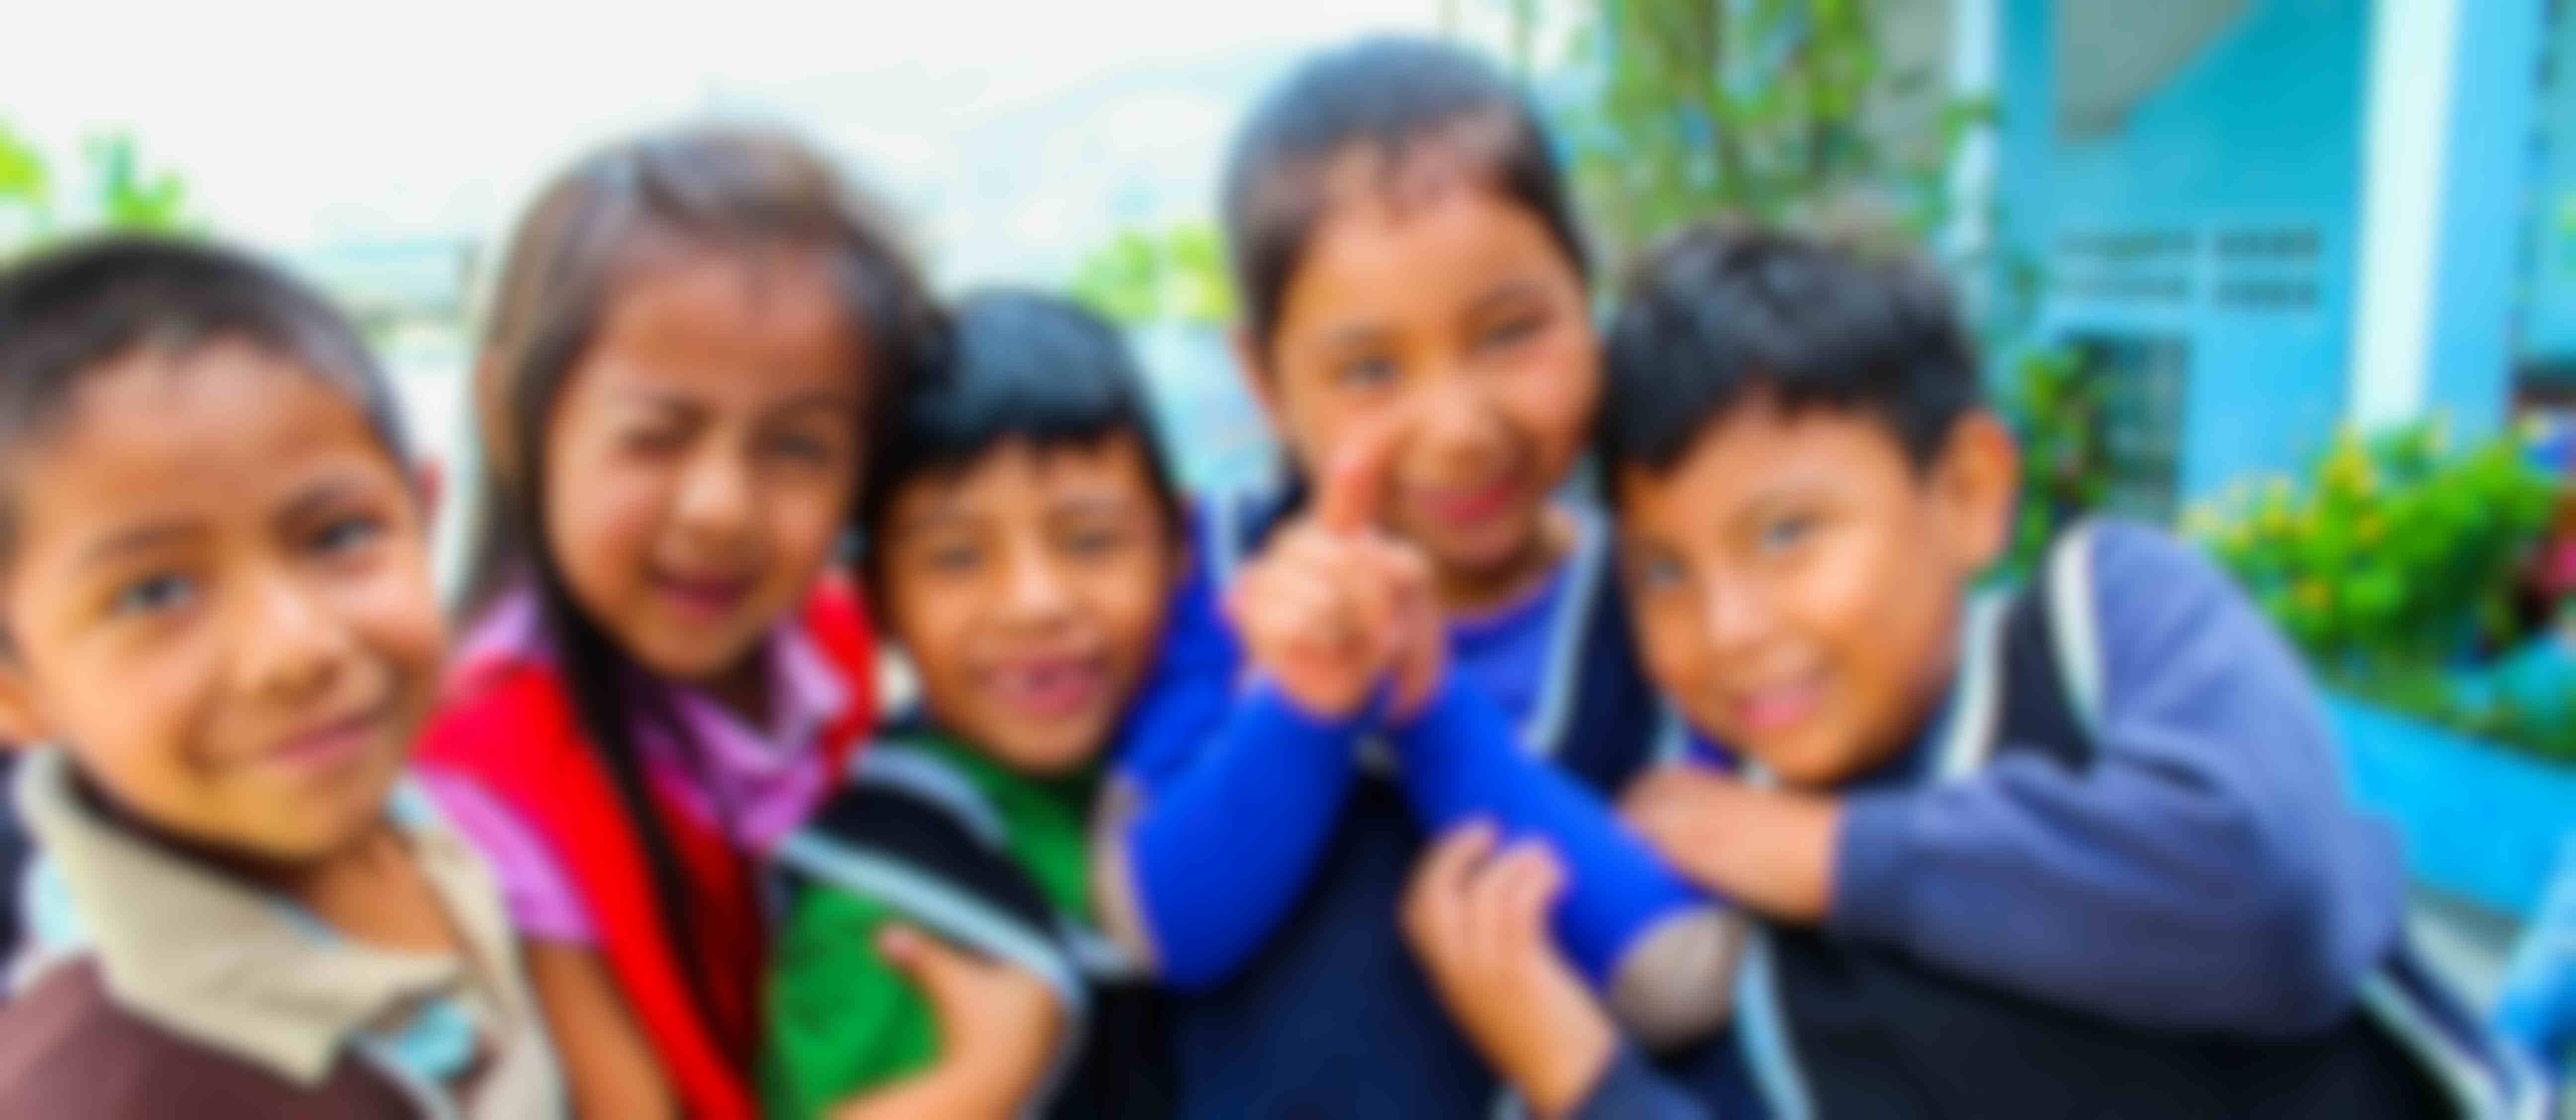 Niños de Guatemala